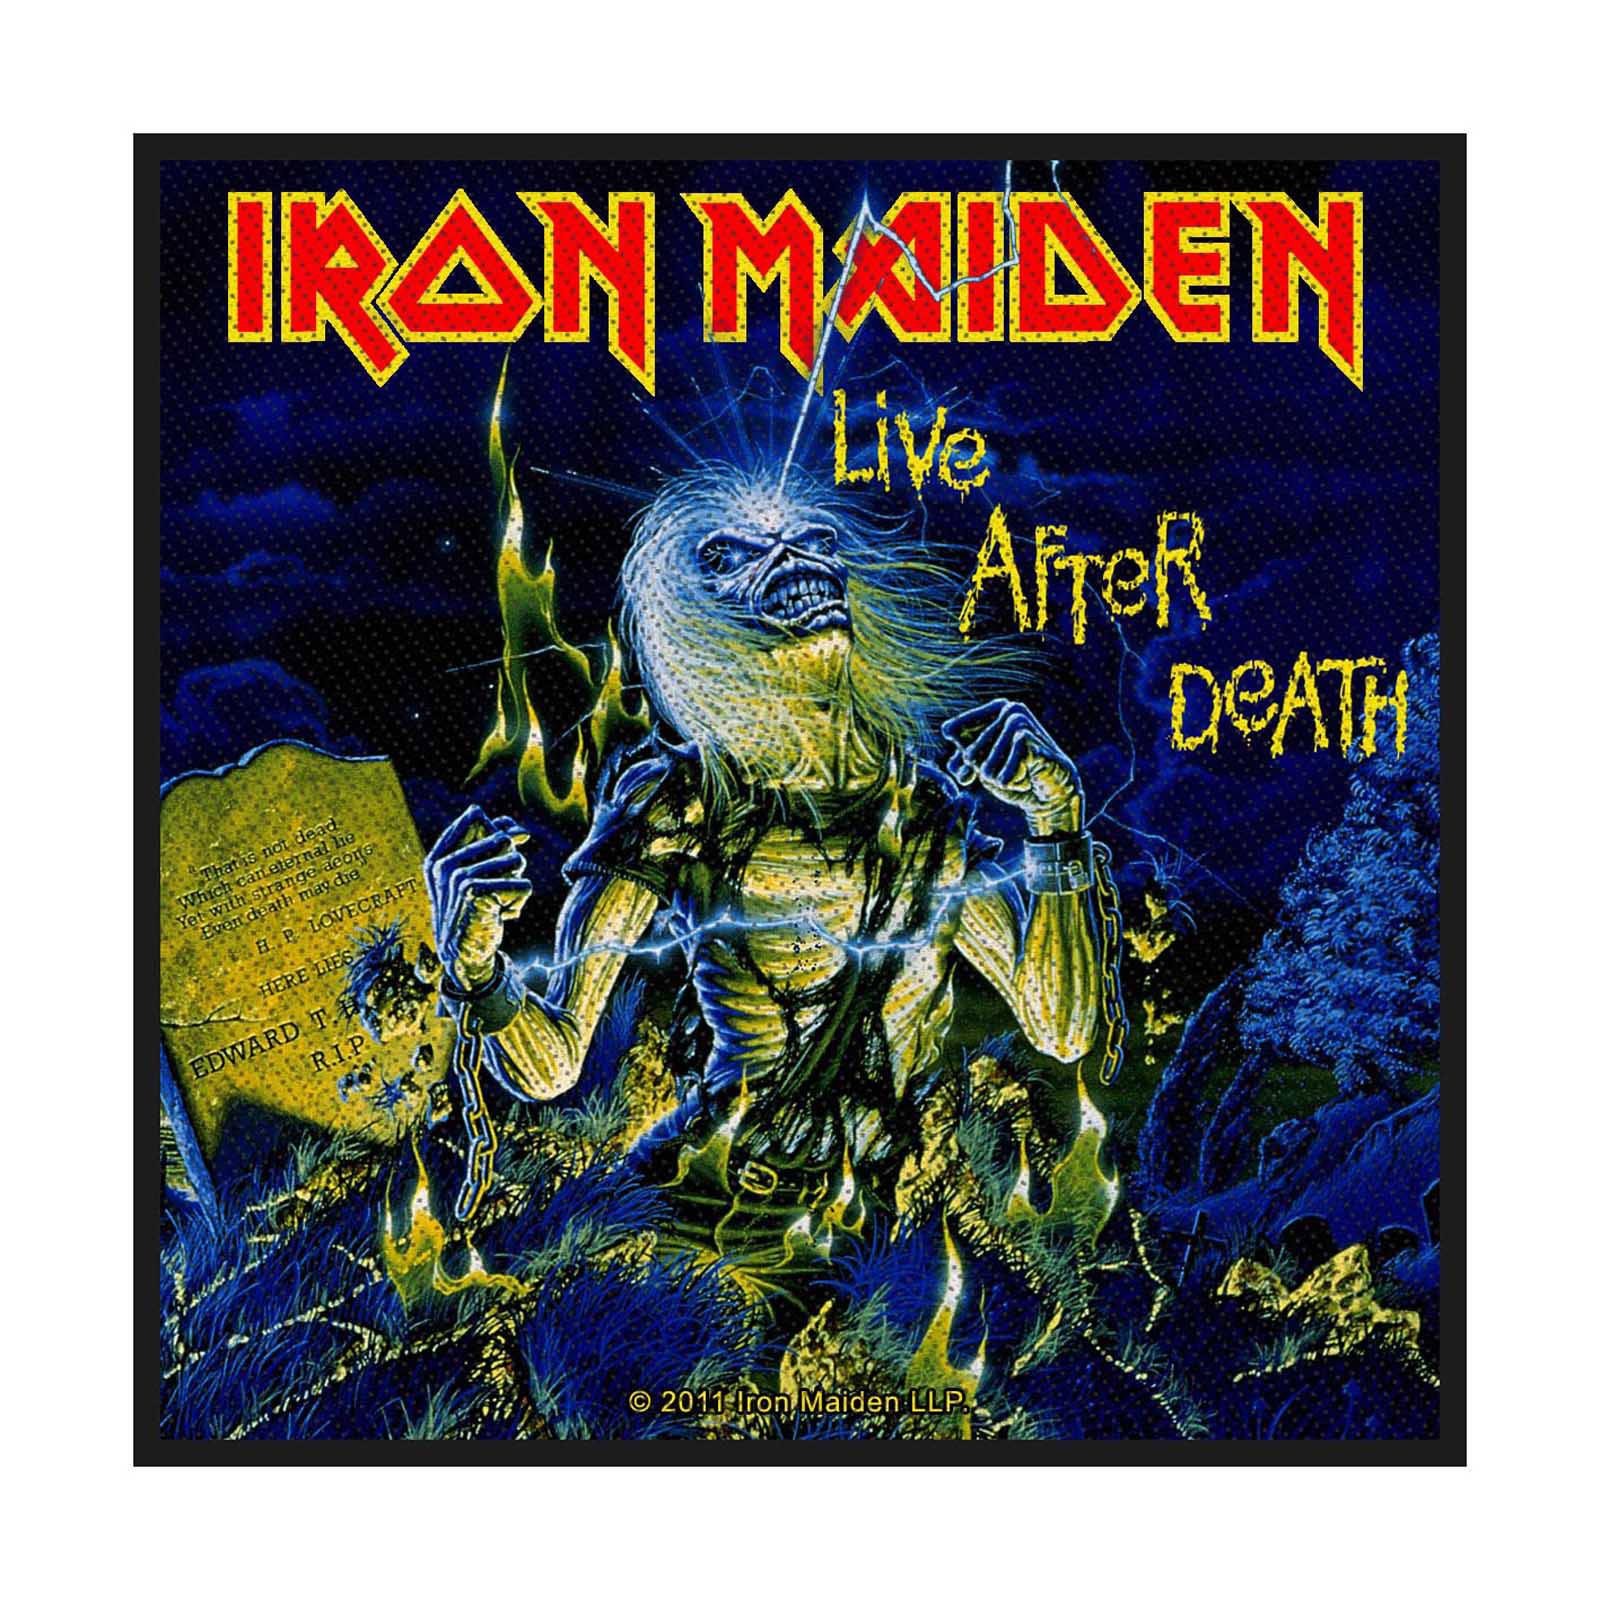 (ACAECf) Iron Maiden ItBVi Live After Death by pb` yCOʔ́z